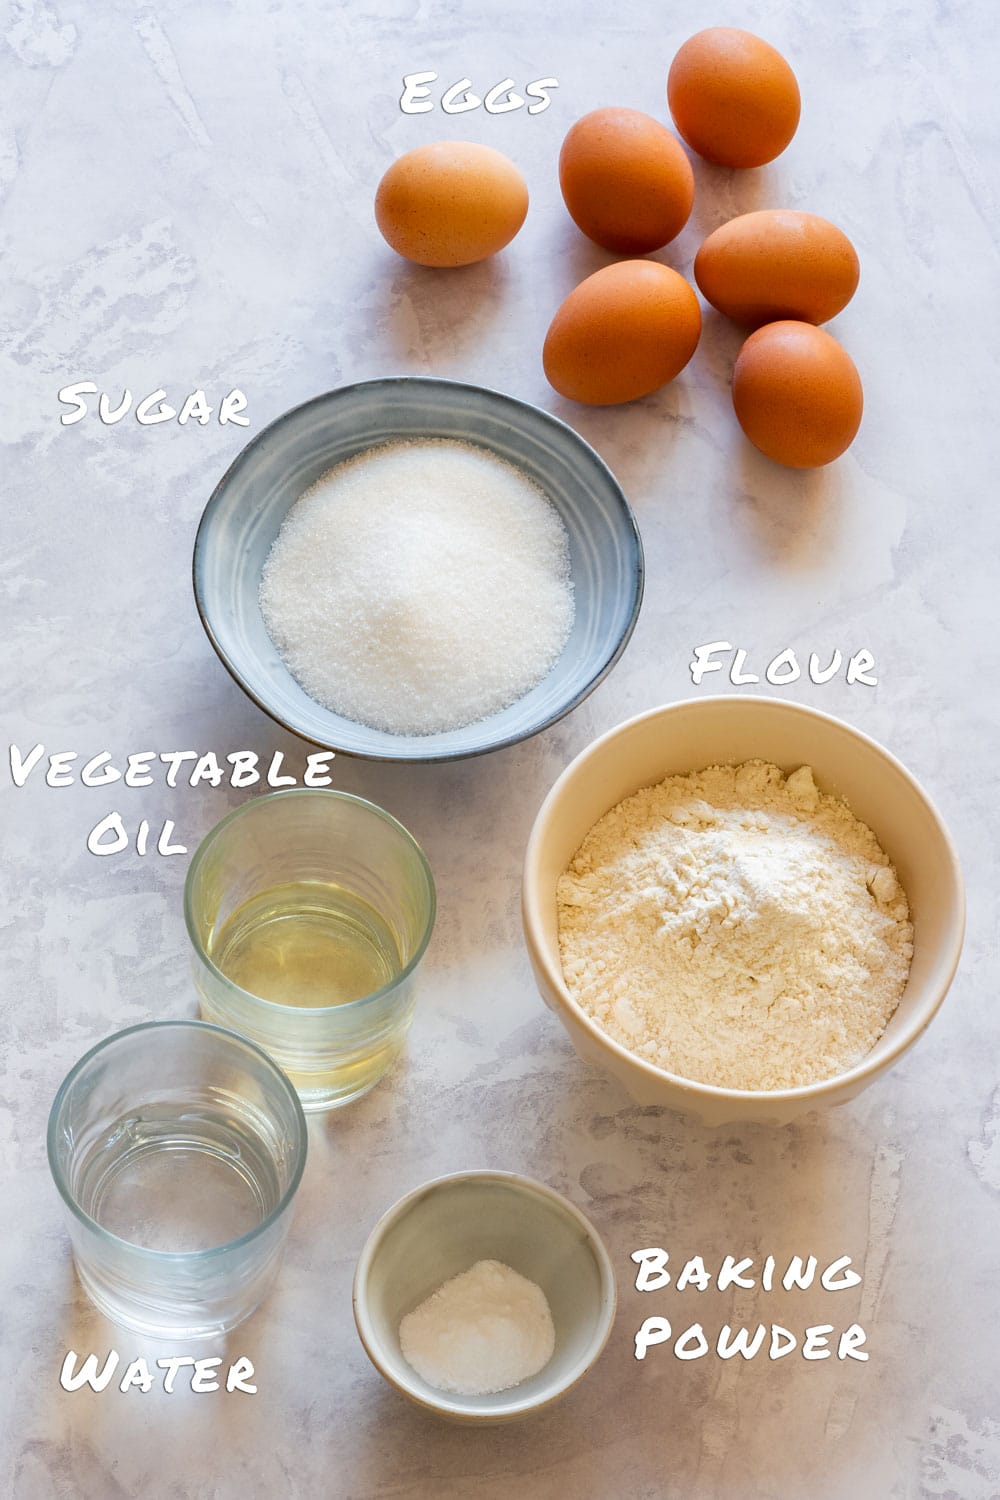 Ingredients for sponge cake - eggs, flour, sugar, baking powder, vegetable oil and water.